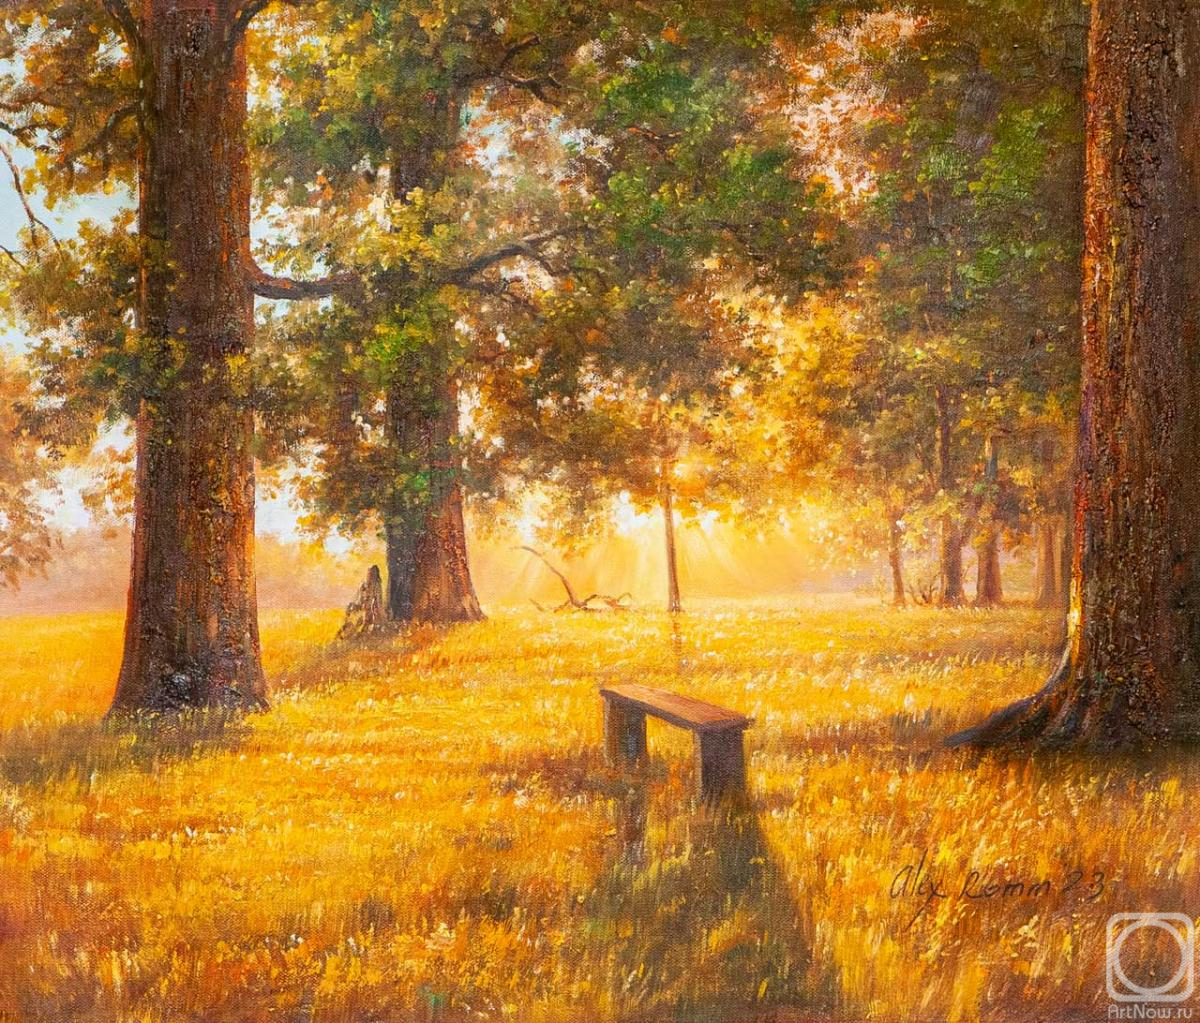 Romm Alexandr. Golden dawn in the forest